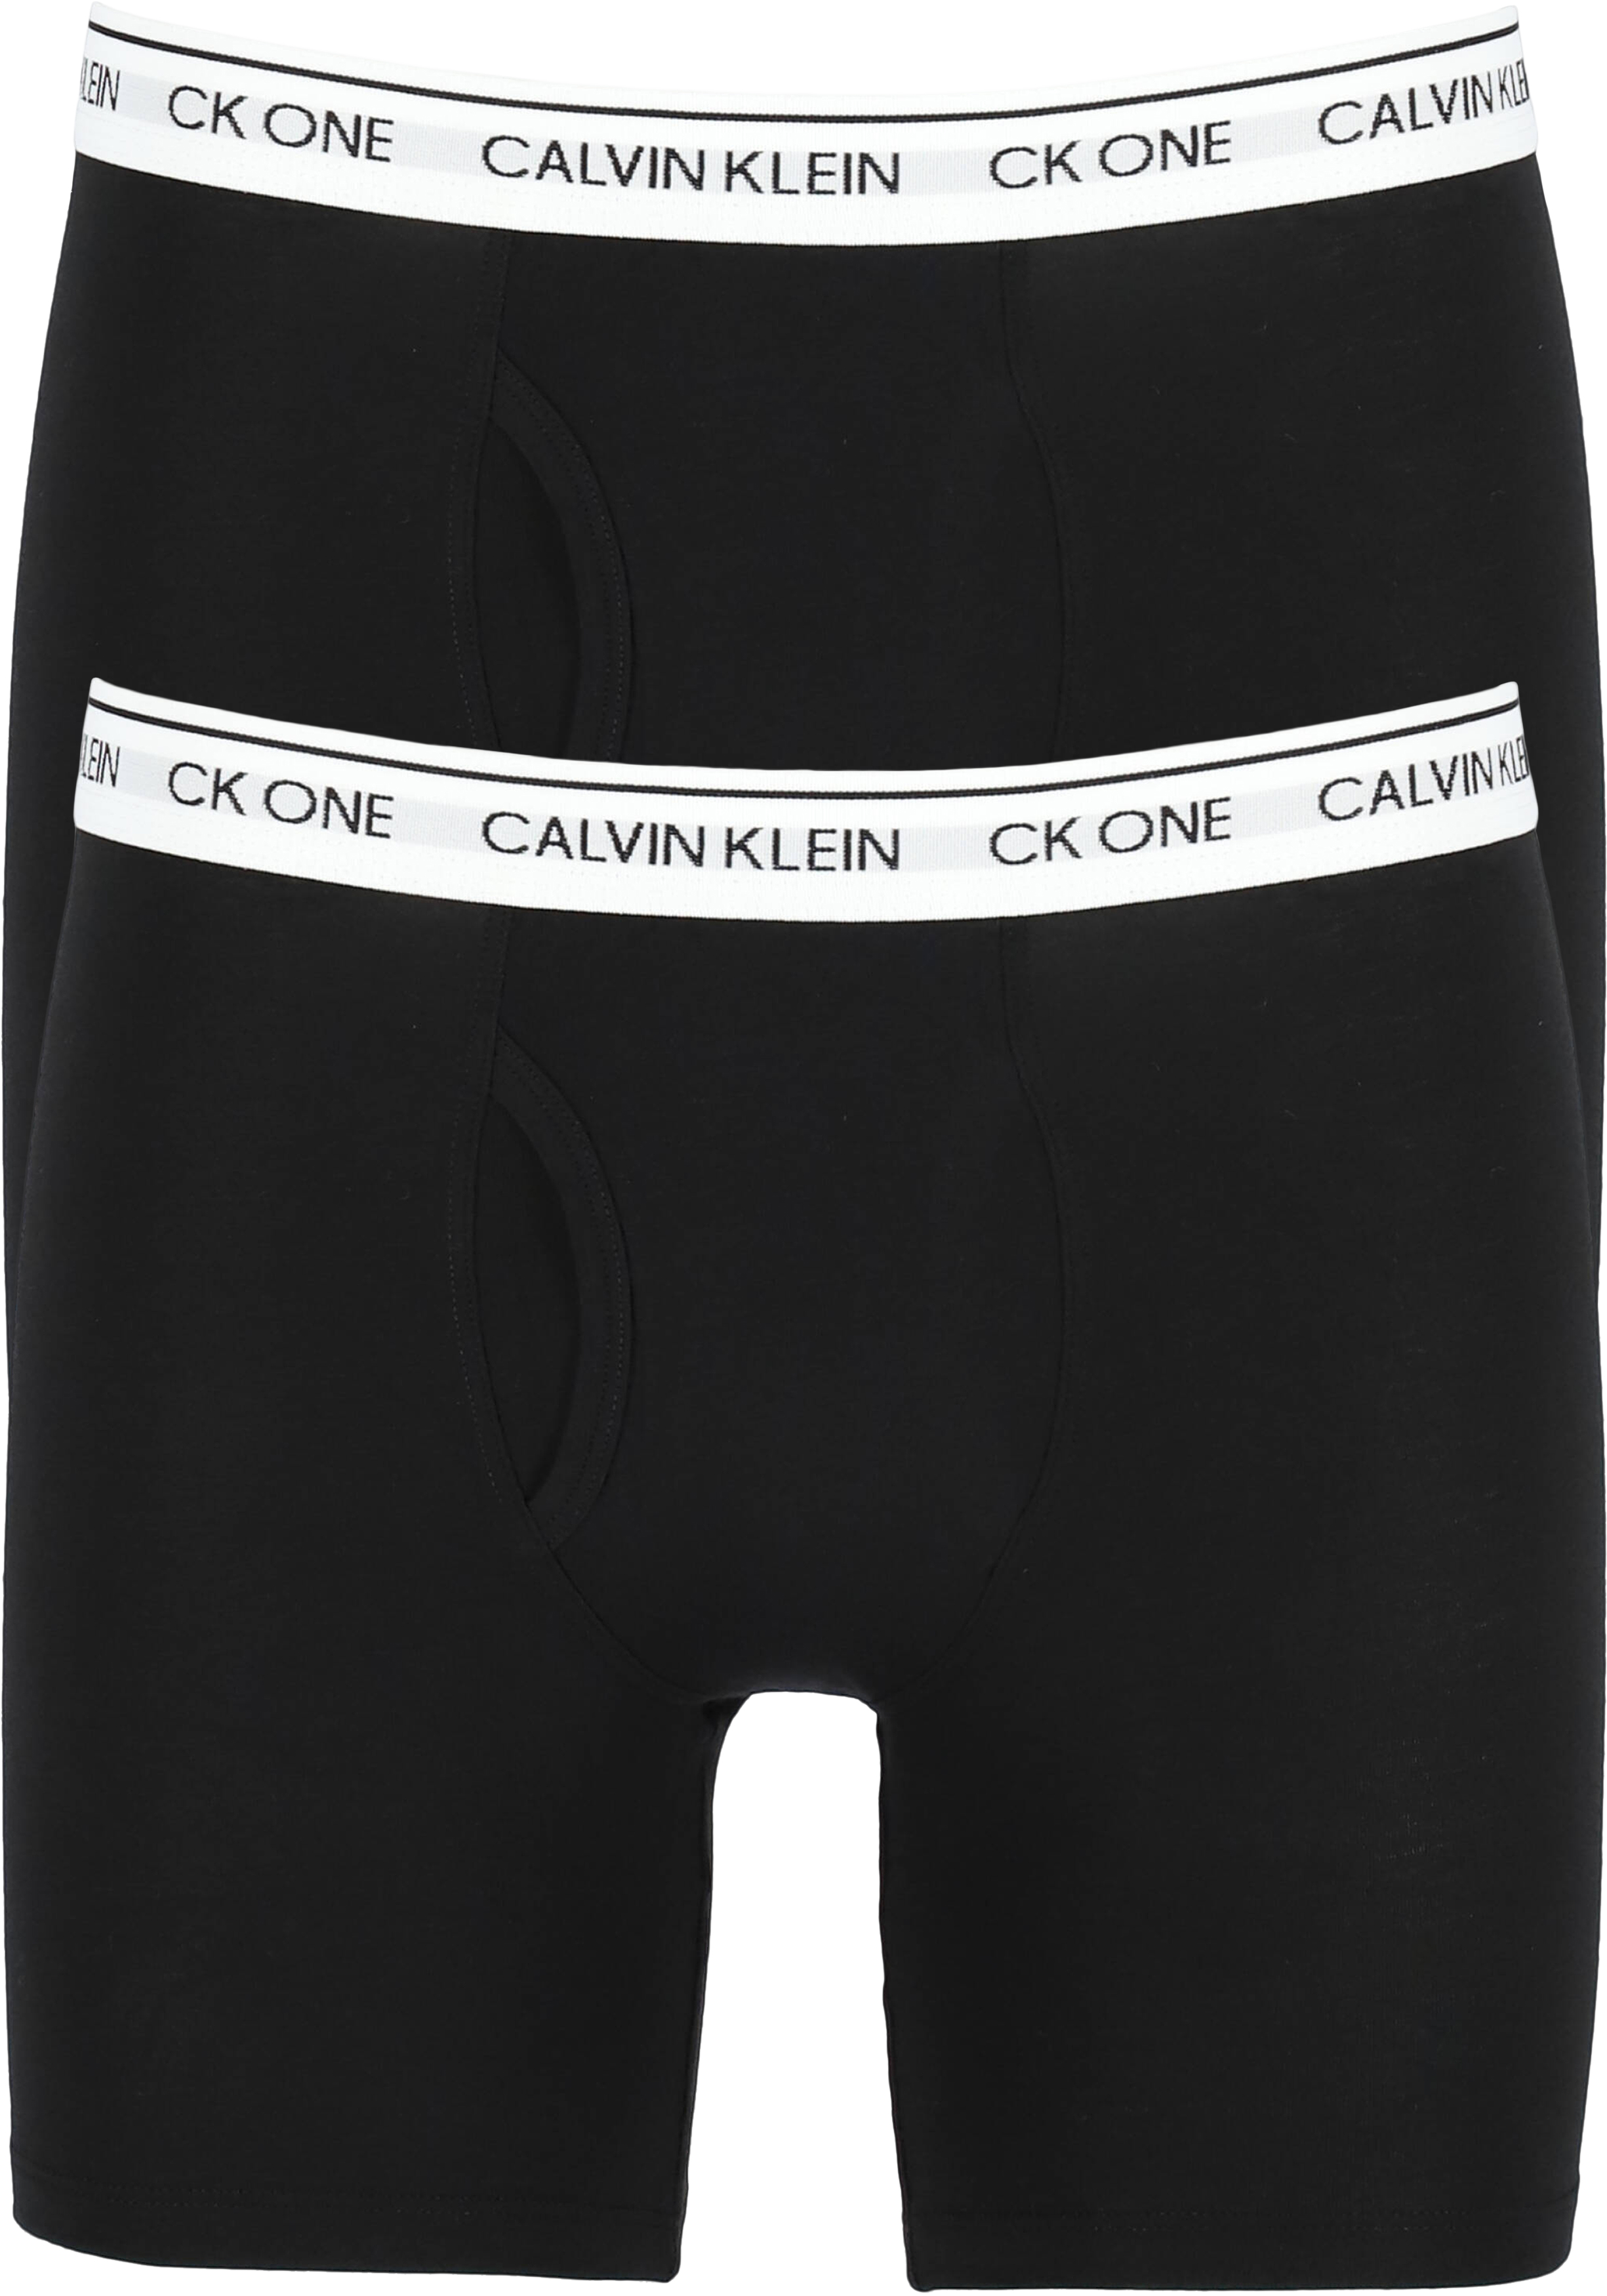 Calvin Klein CK ONE Cotton boxer brief (2-pack), heren boxer lang met gulp, zwart